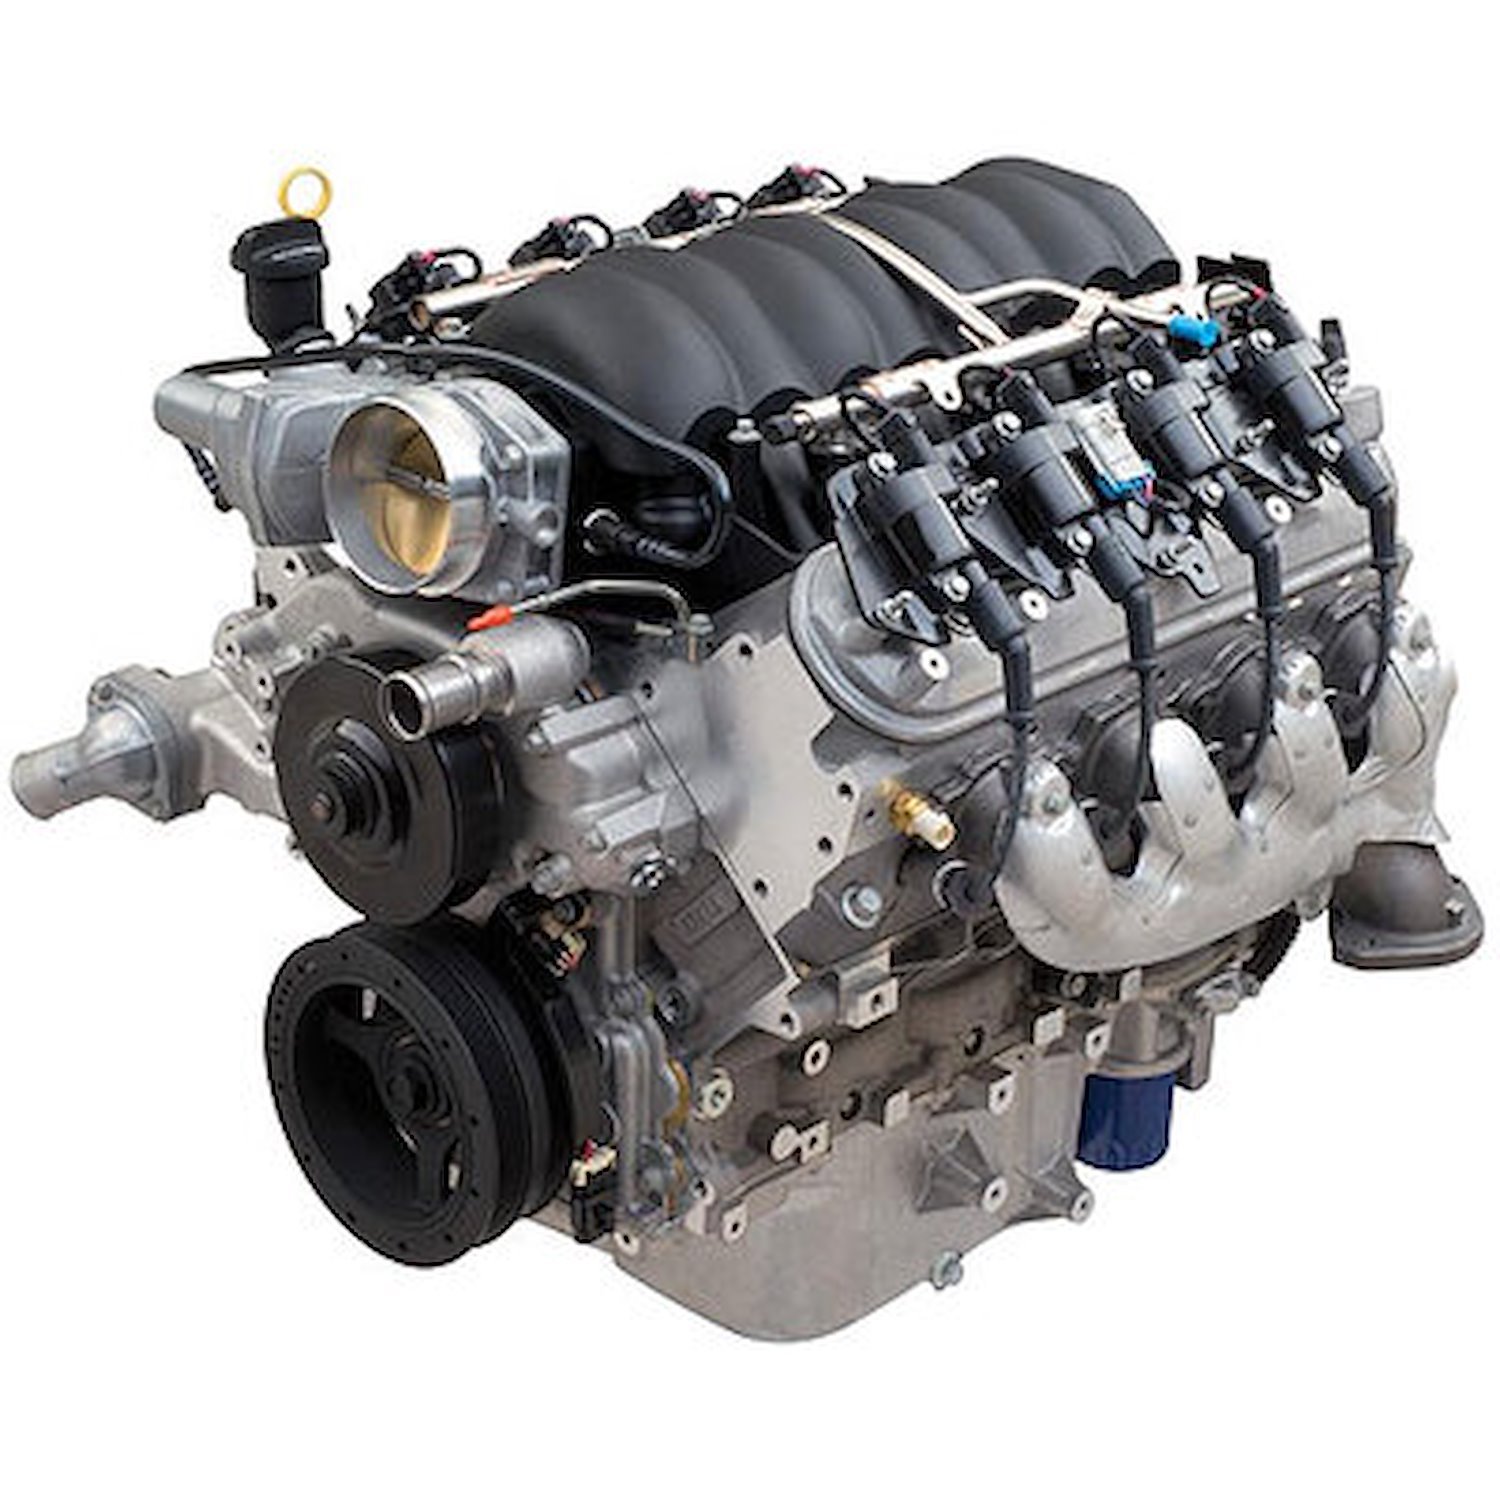 19435100 LS376/480 Crate Engine LS3 6.2L (376 ci.) w/Racing-Inspired LS Hot Cam [495 HP @ 6200 RPM]